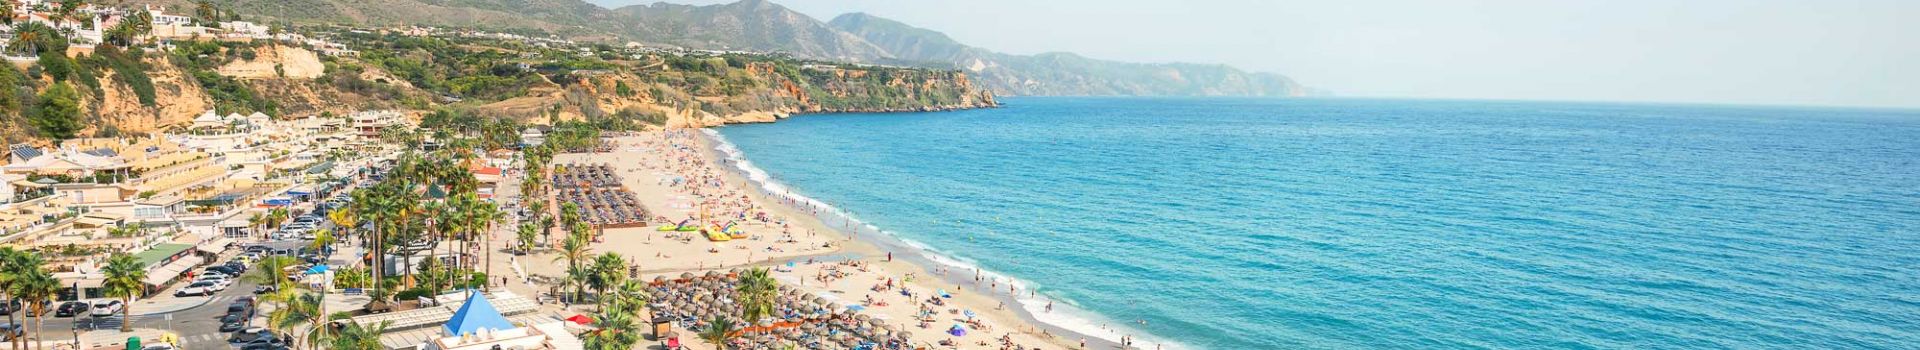 Holidays to Costa del Sol | Book Flights & Hotel | Cassidy Travel